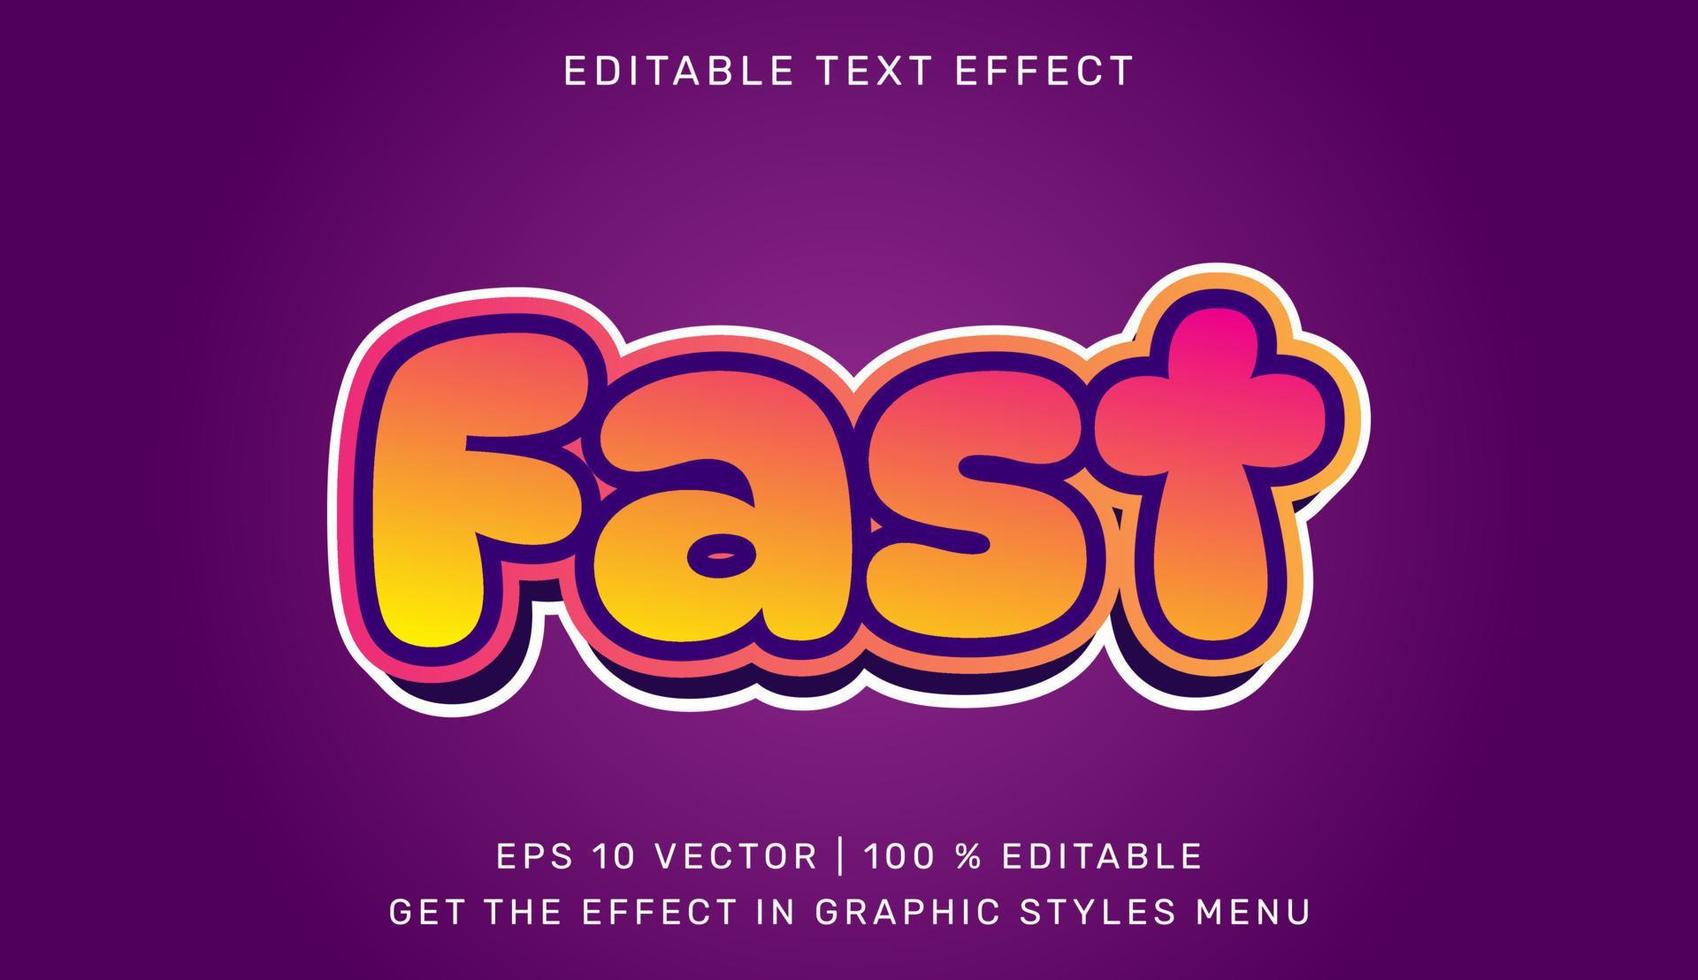 Fast 3d editable text effect template vector